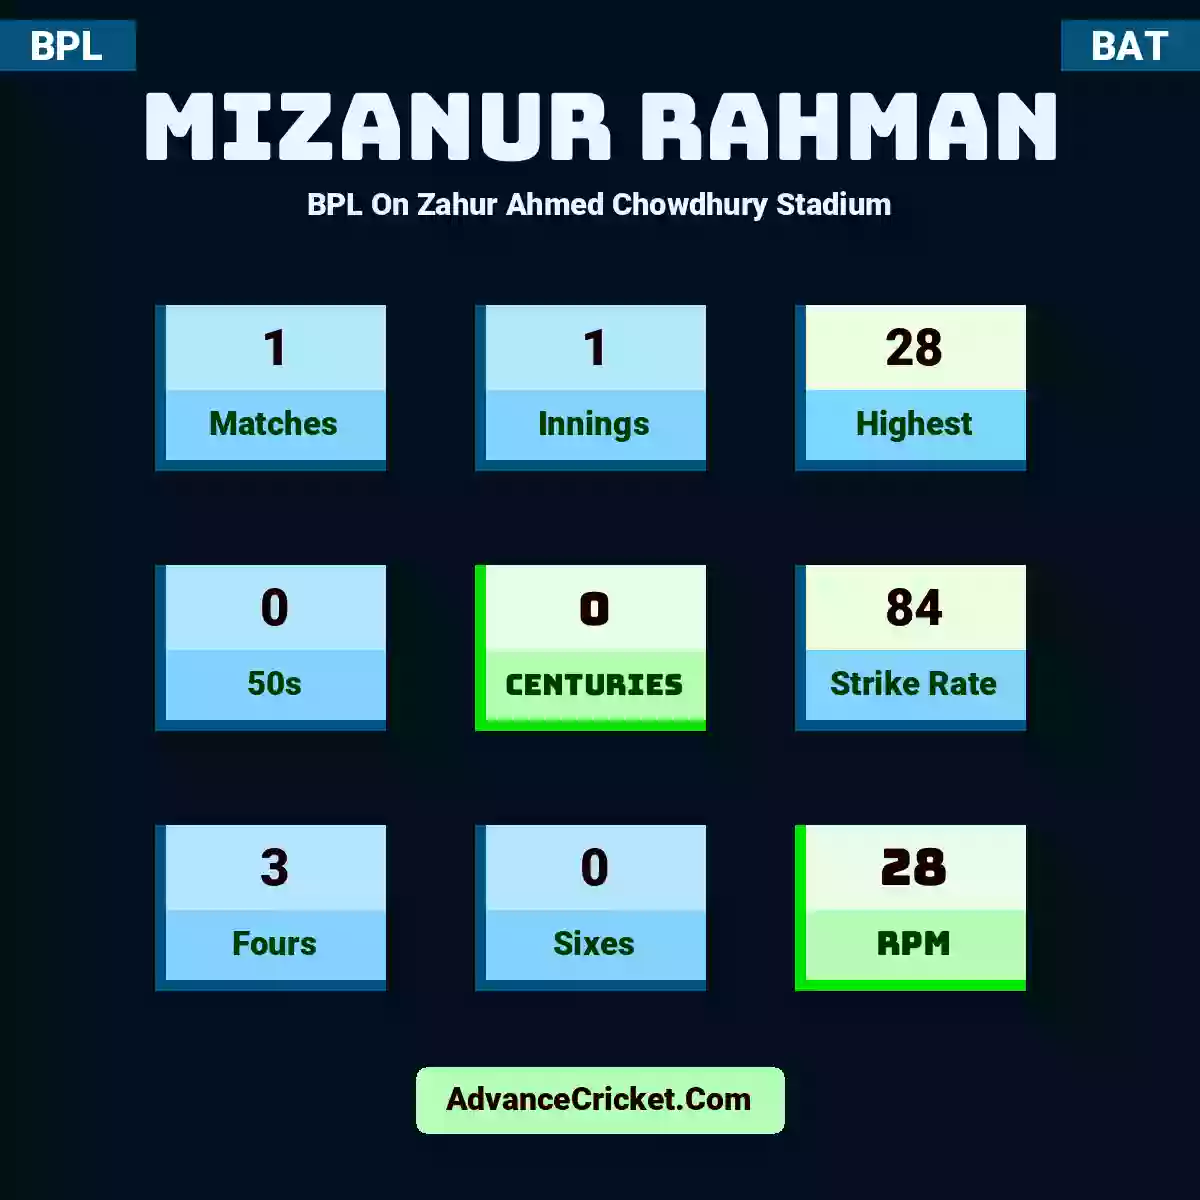 Mizanur Rahman BPL  On Zahur Ahmed Chowdhury Stadium, Mizanur Rahman played 1 matches, scored 28 runs as highest, 0 half-centuries, and 0 centuries, with a strike rate of 84. M.Rahman hit 3 fours and 0 sixes, with an RPM of 28.